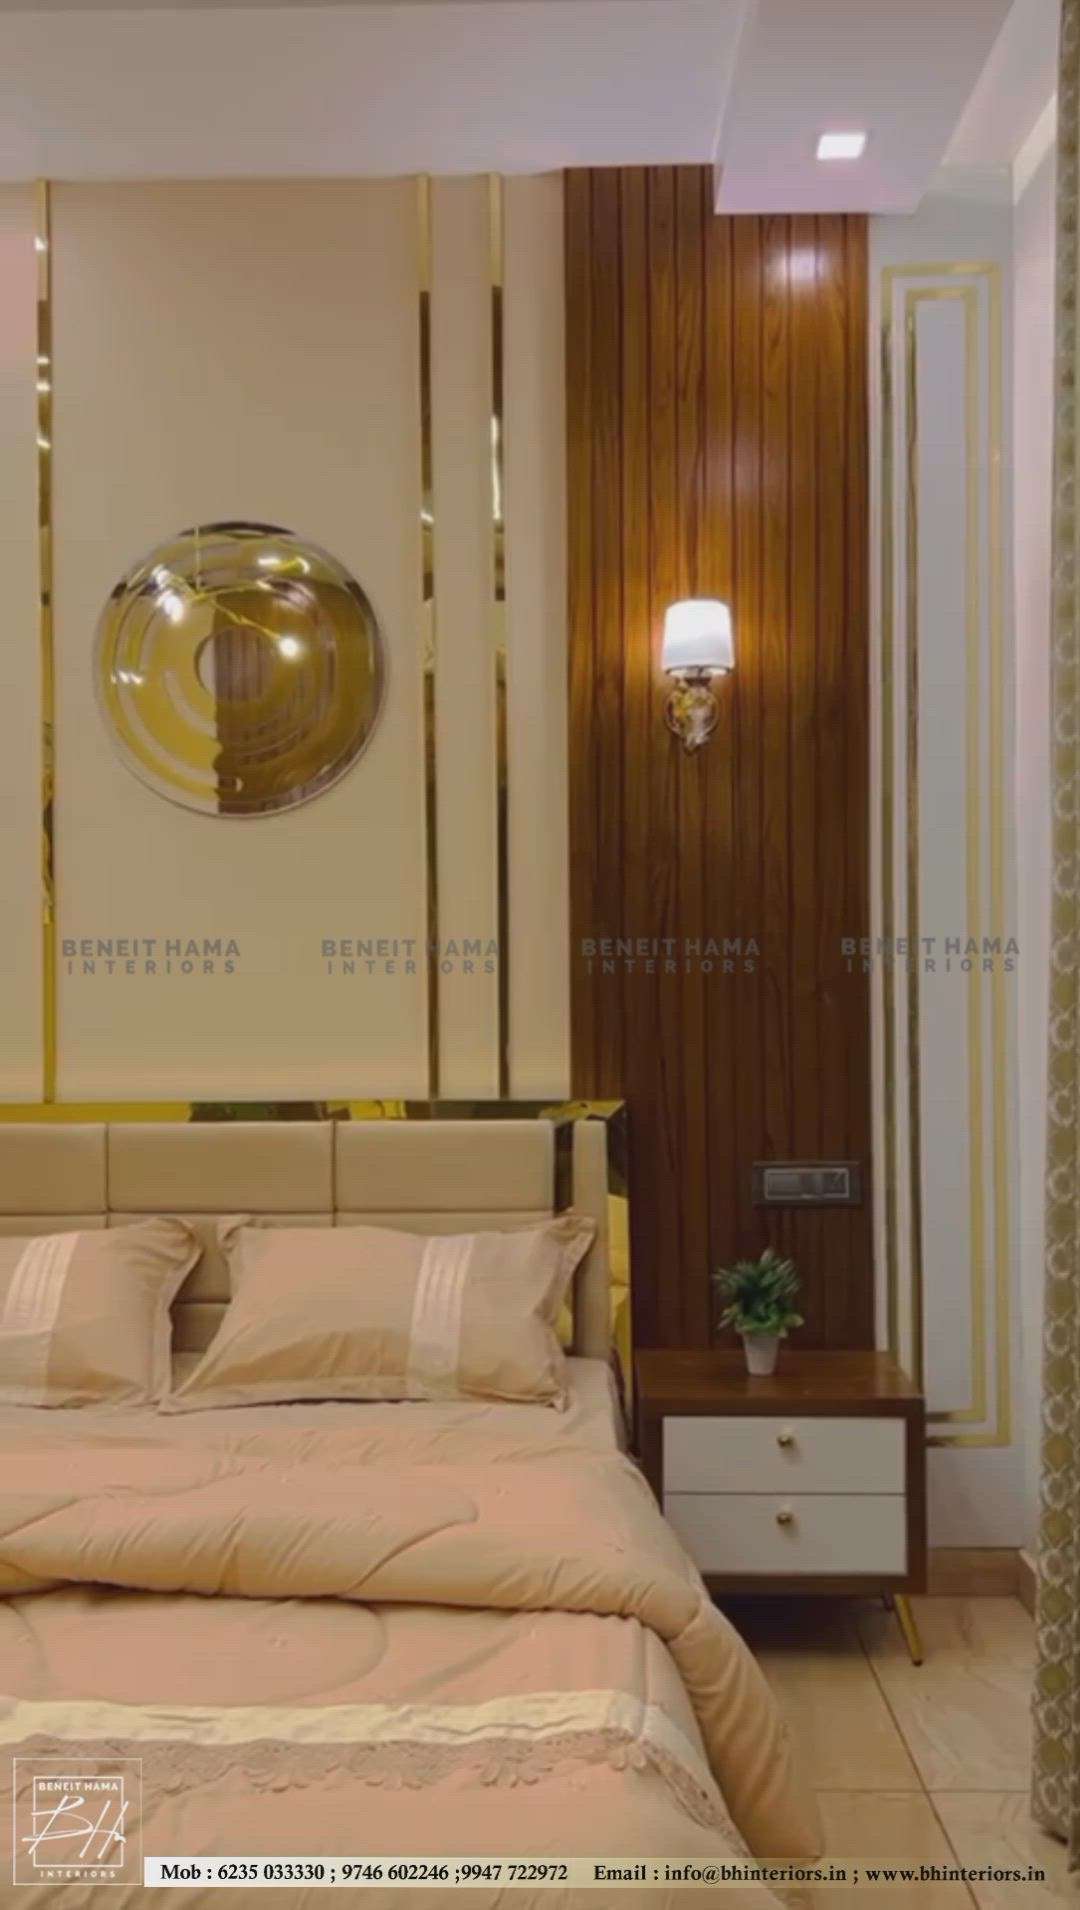 Bridal bedroom #trikaripur
#bridalbedroom 
#bhinteriors #BedroomDesigns #KeralaStyleHouse #Kasargod  #payyannur #bedroominteriors